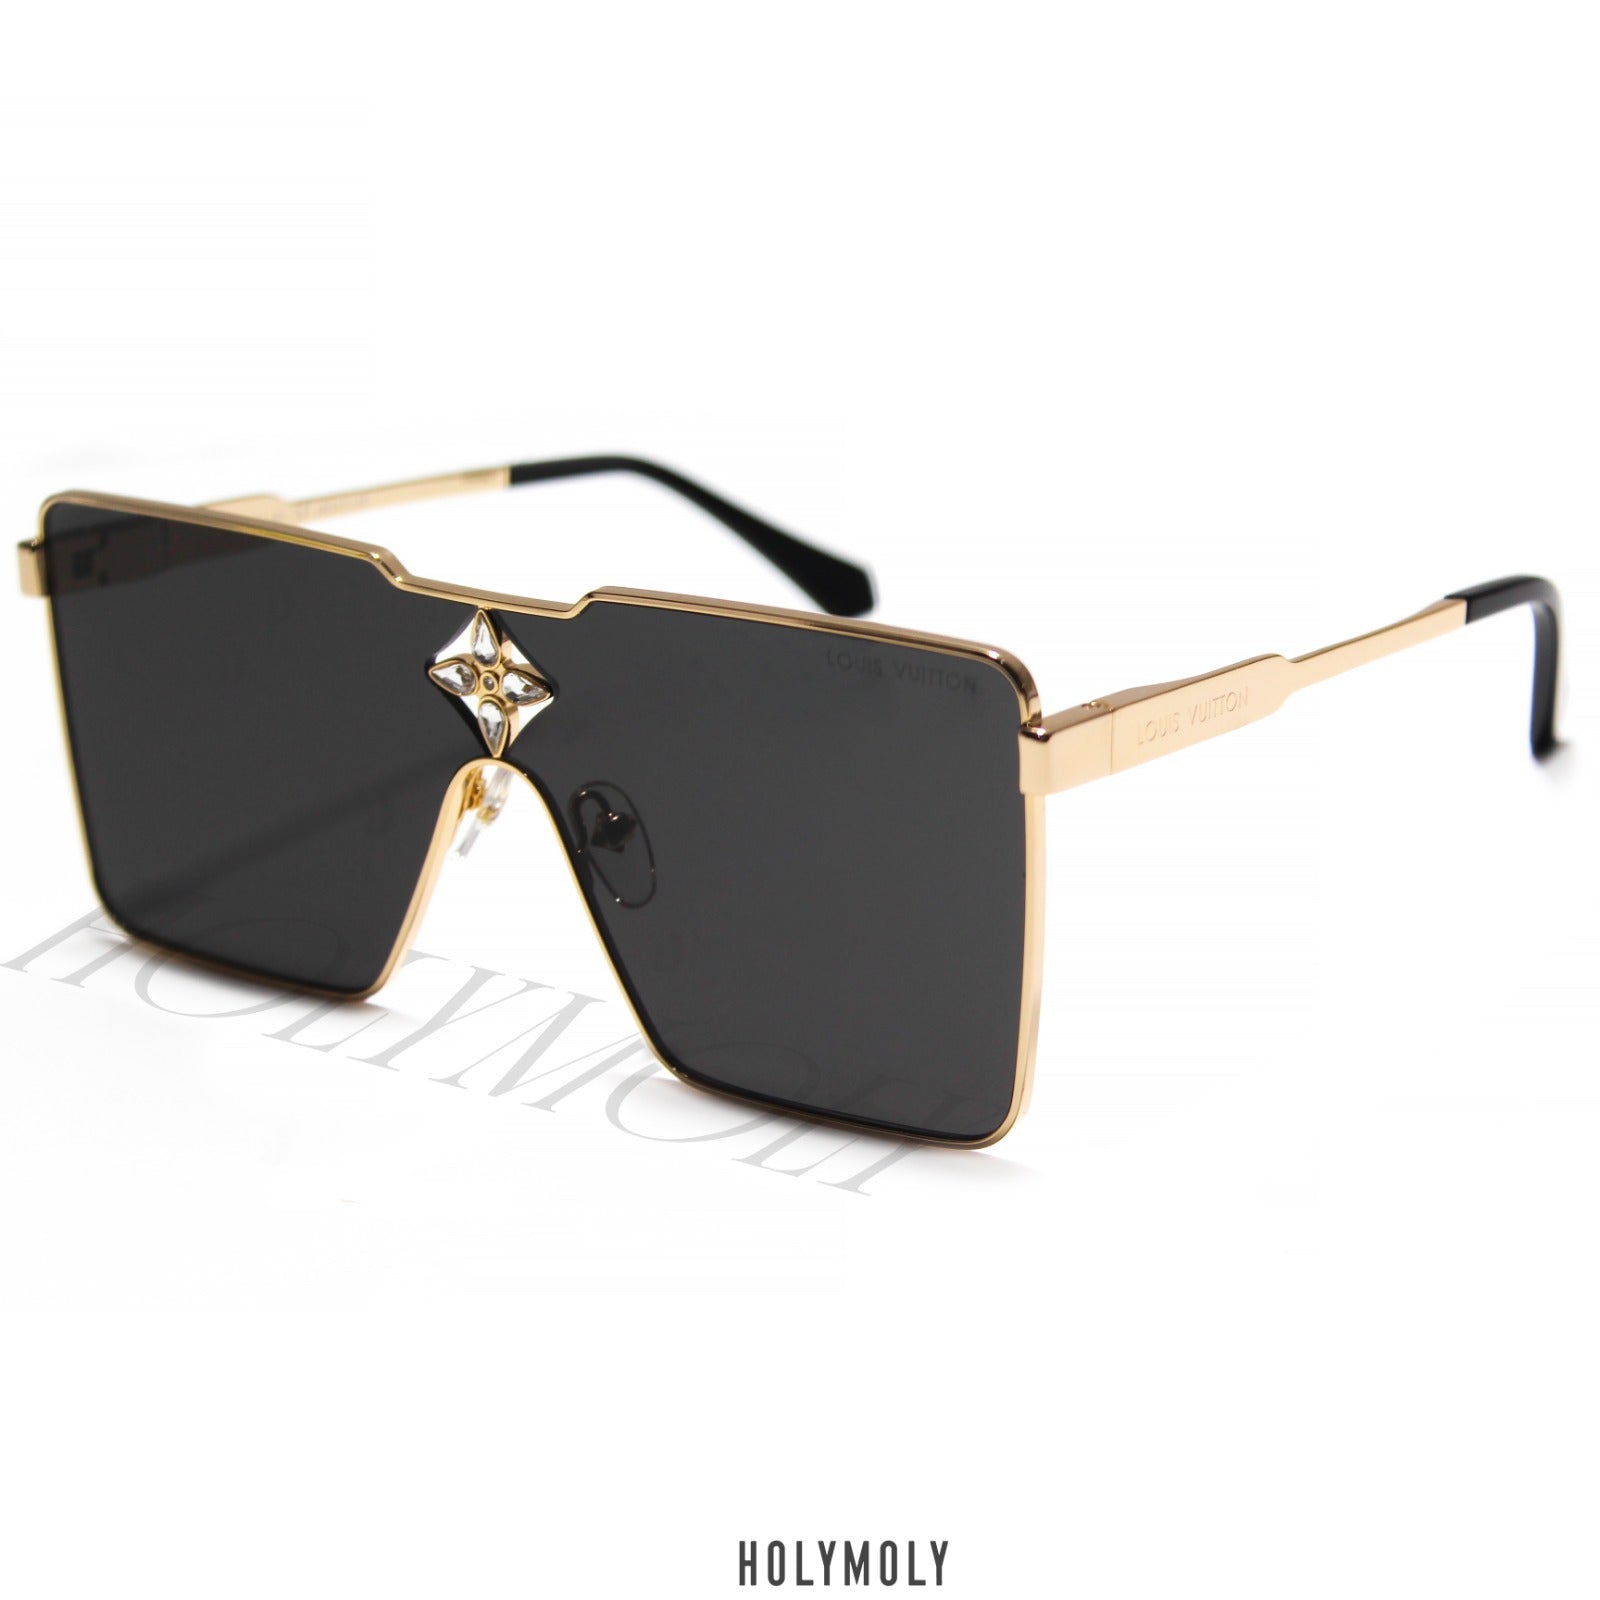 Louis Vuitton #3 Men's Sunglasses Cyclone Metal Z1700U Multicolor Gold  Black